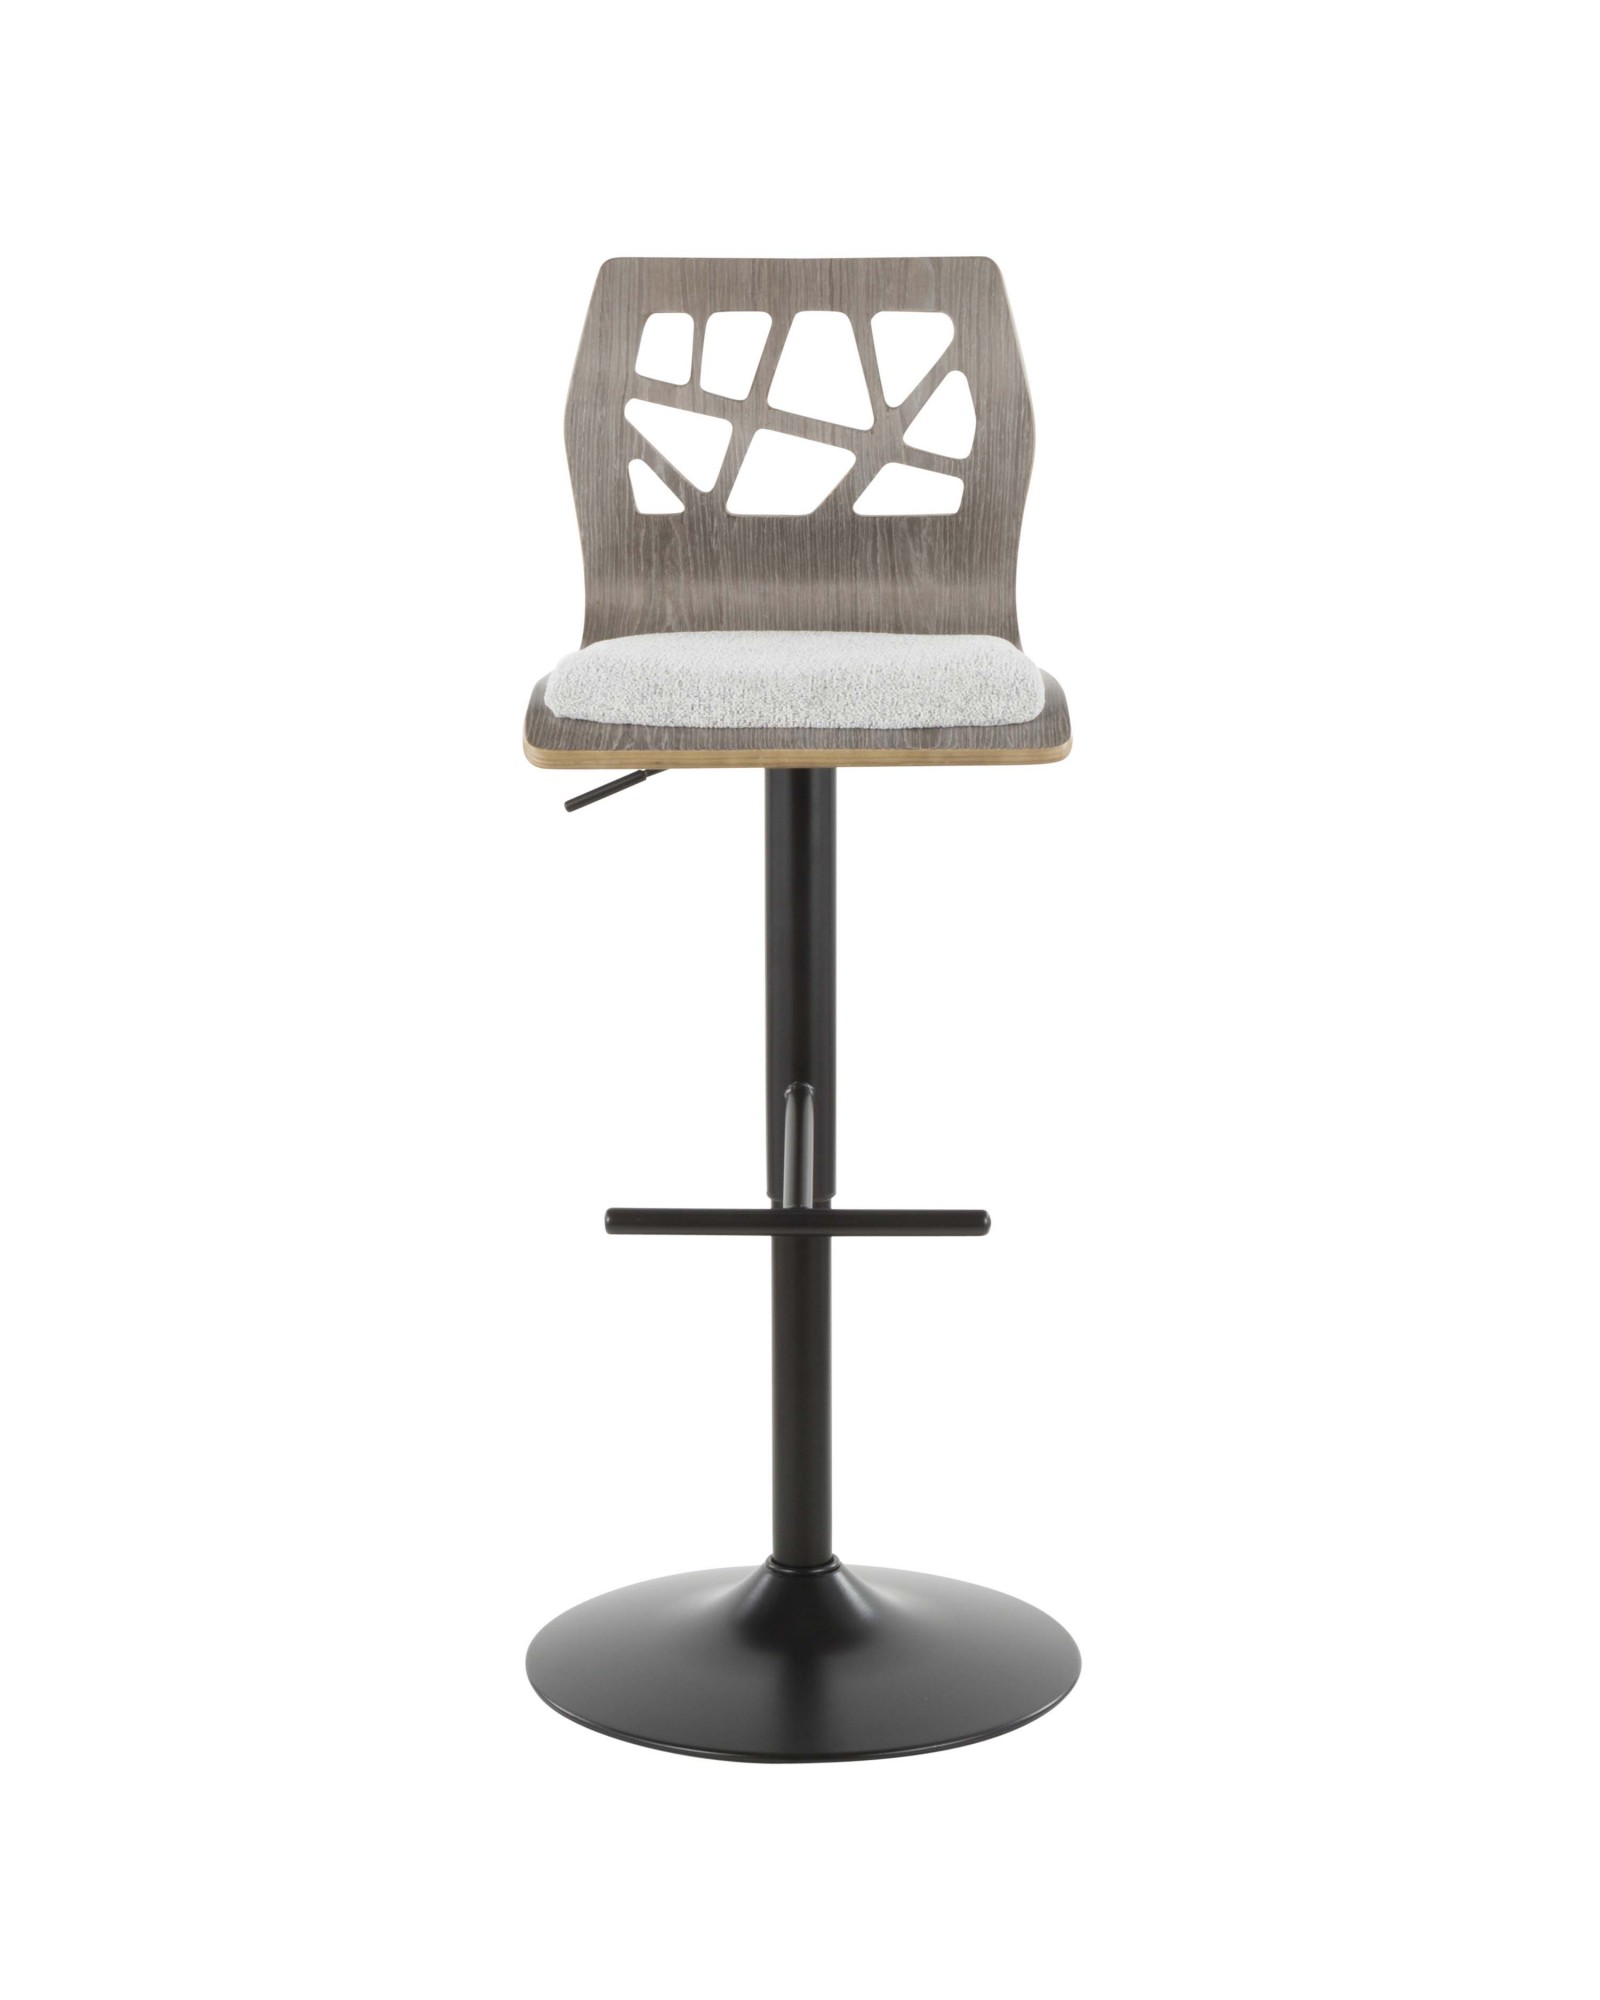 Folia Mid-Century Modern Adjustable Barstool in Light Grey Wood and Light Grey Fabric